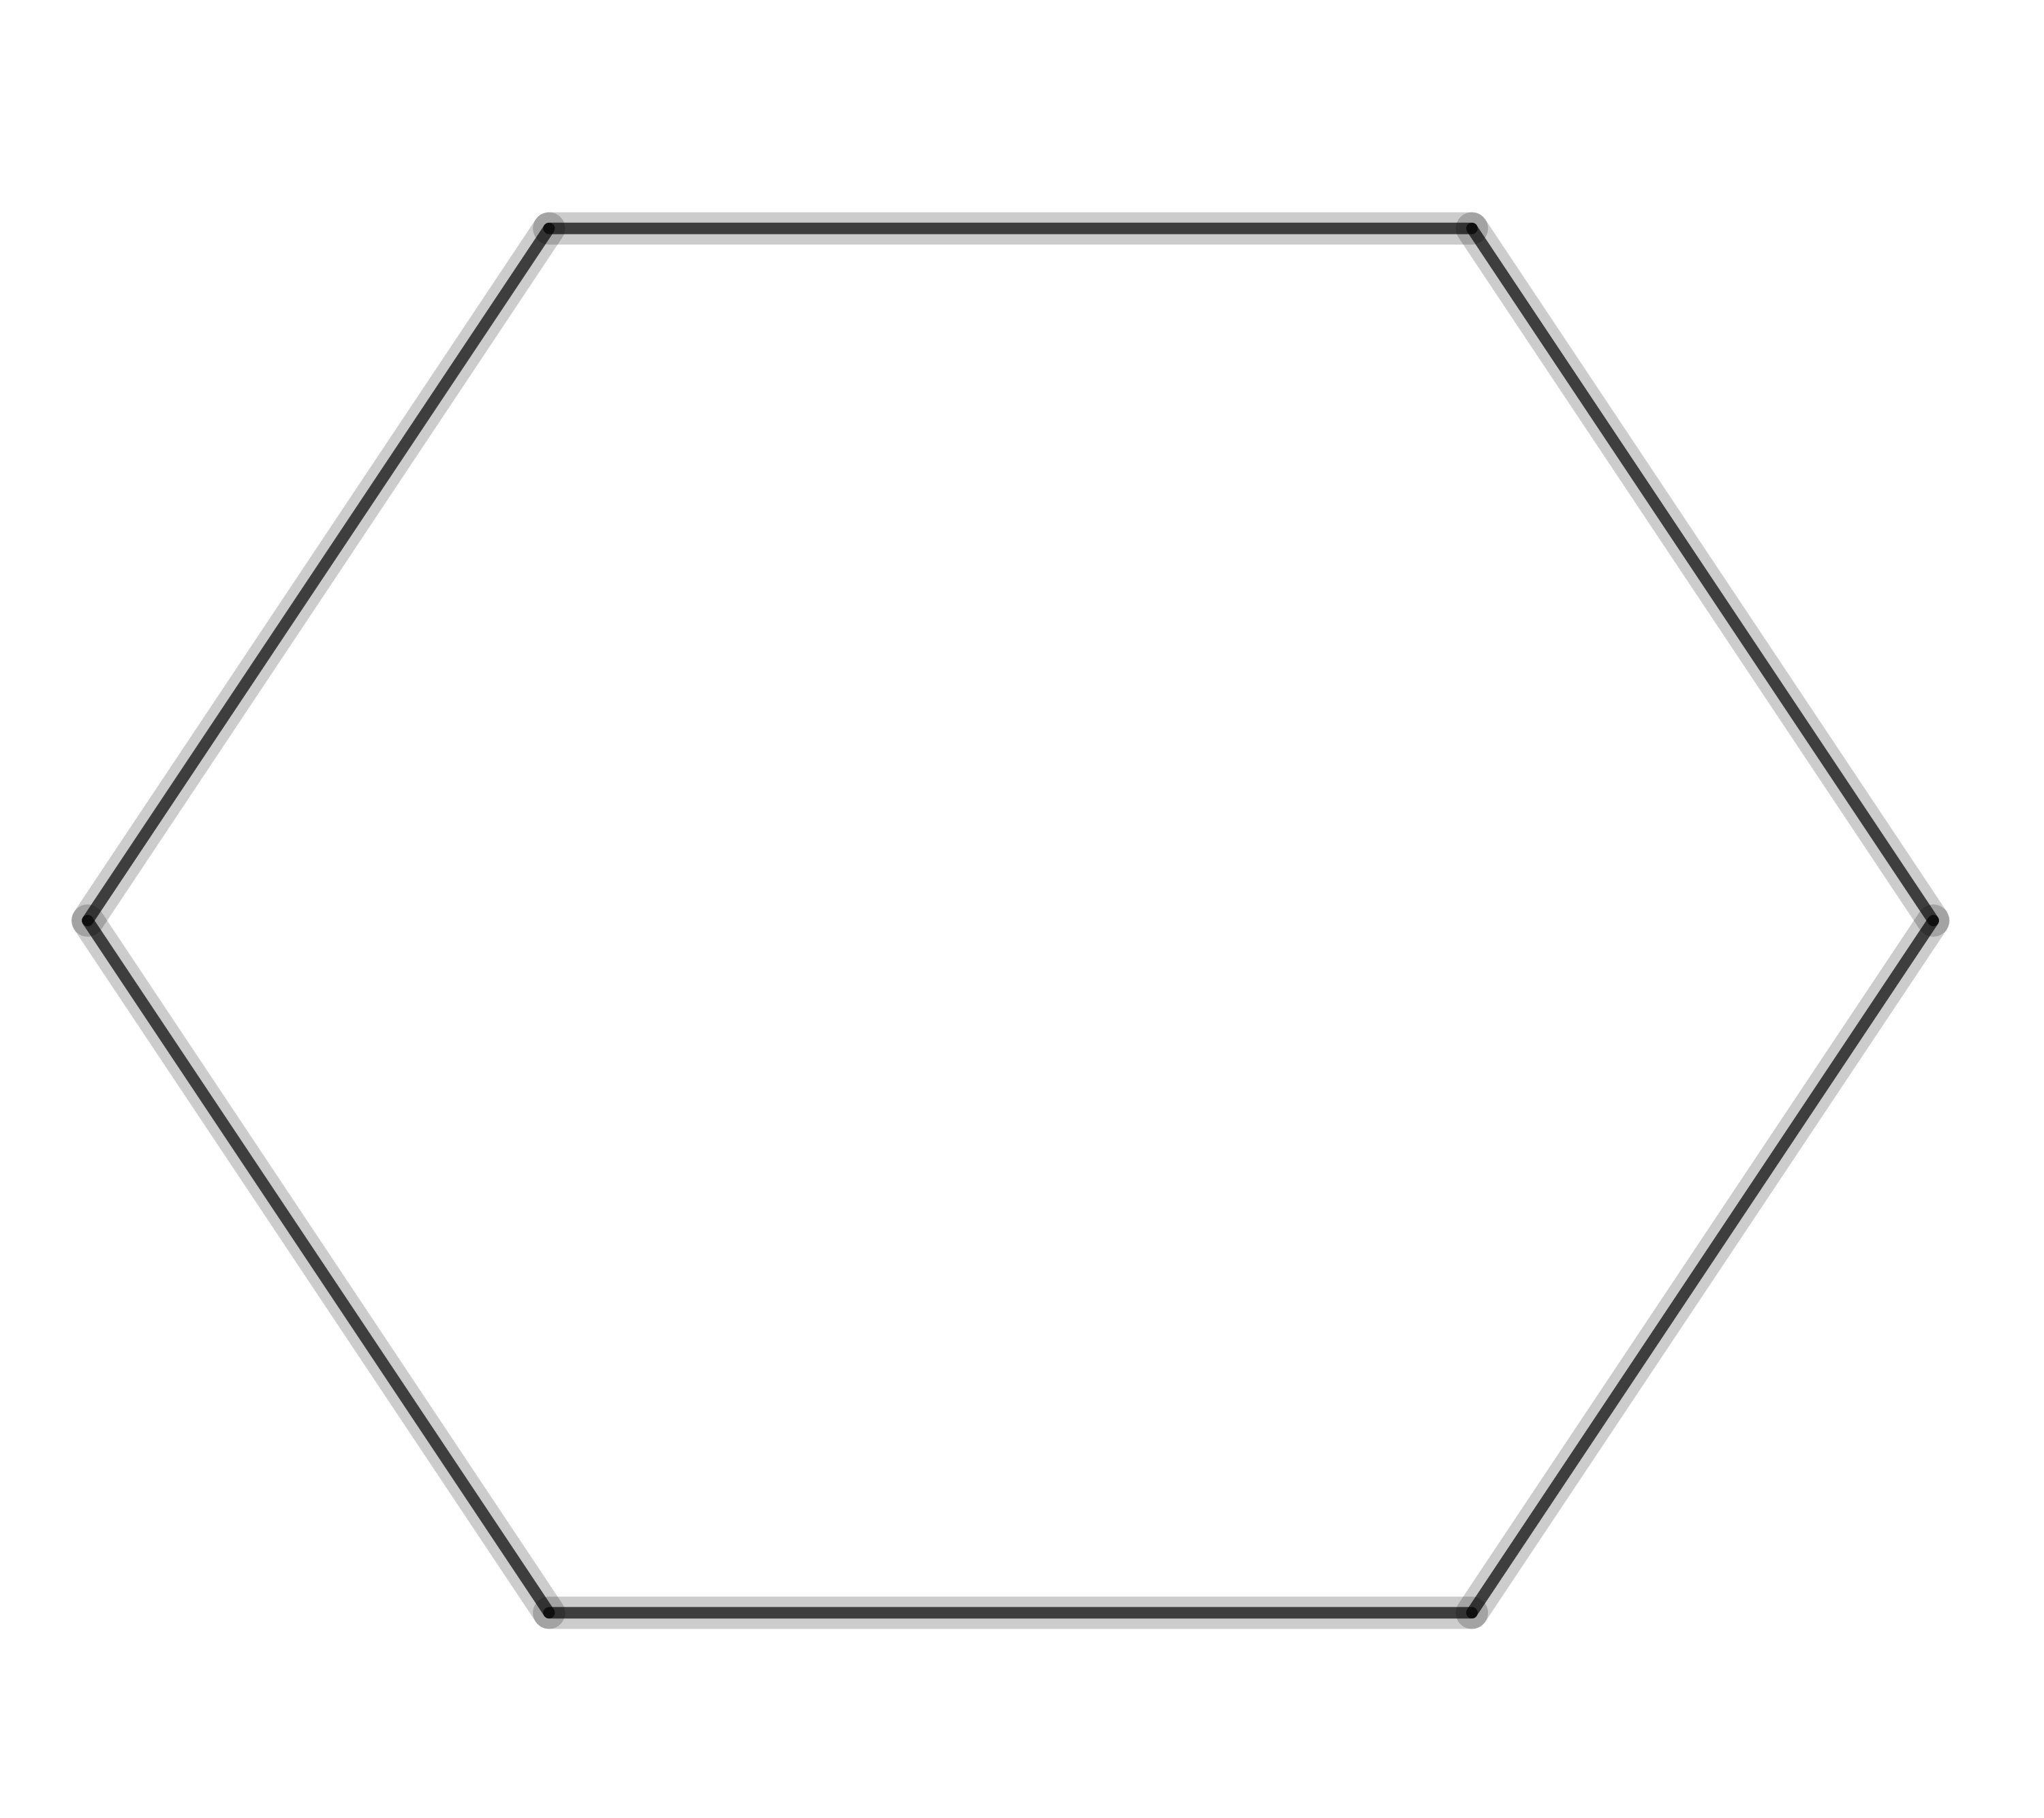 Шестиугольник из бумаги